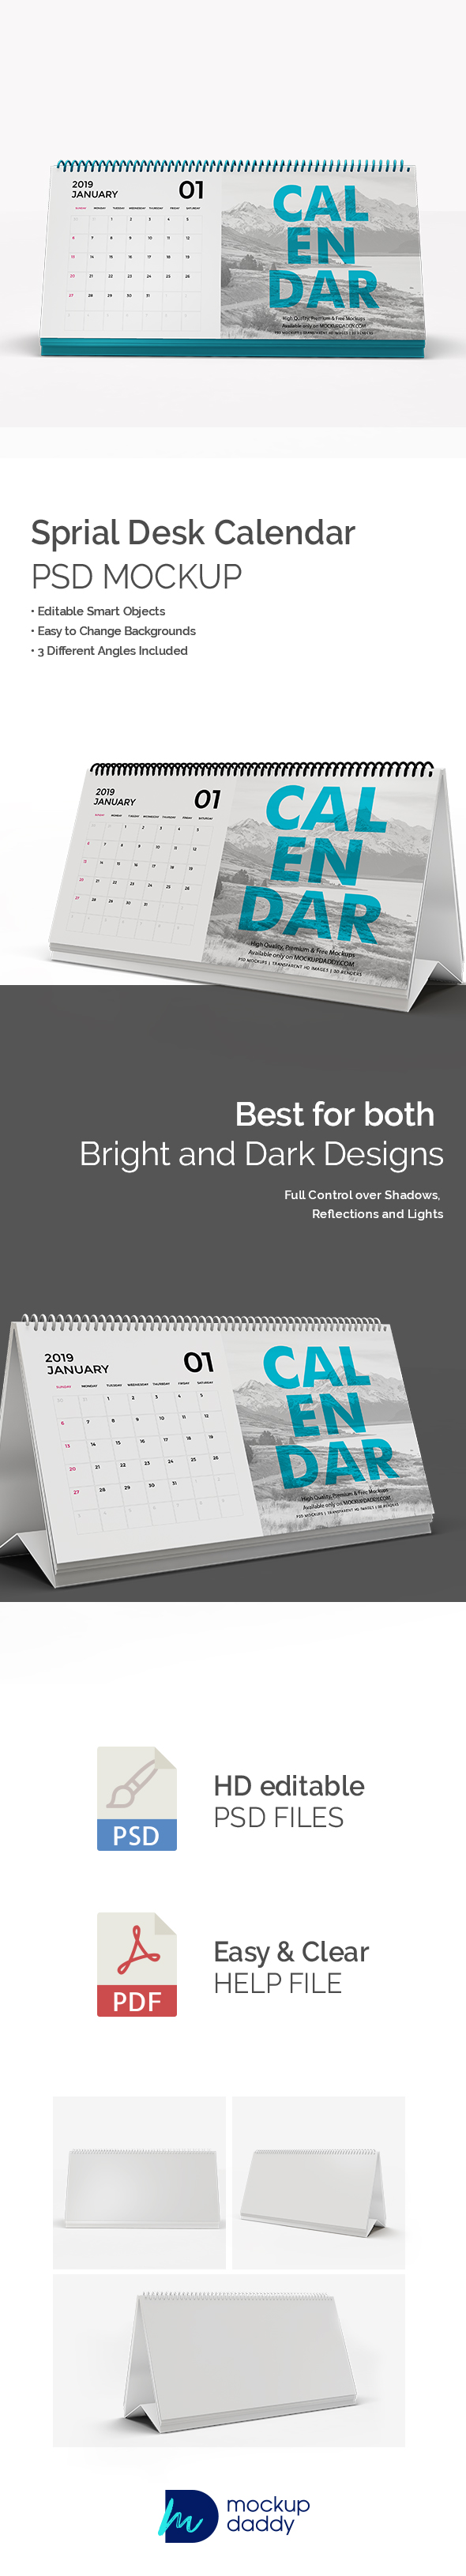 Spiral Desk Calendar Mockup Featured